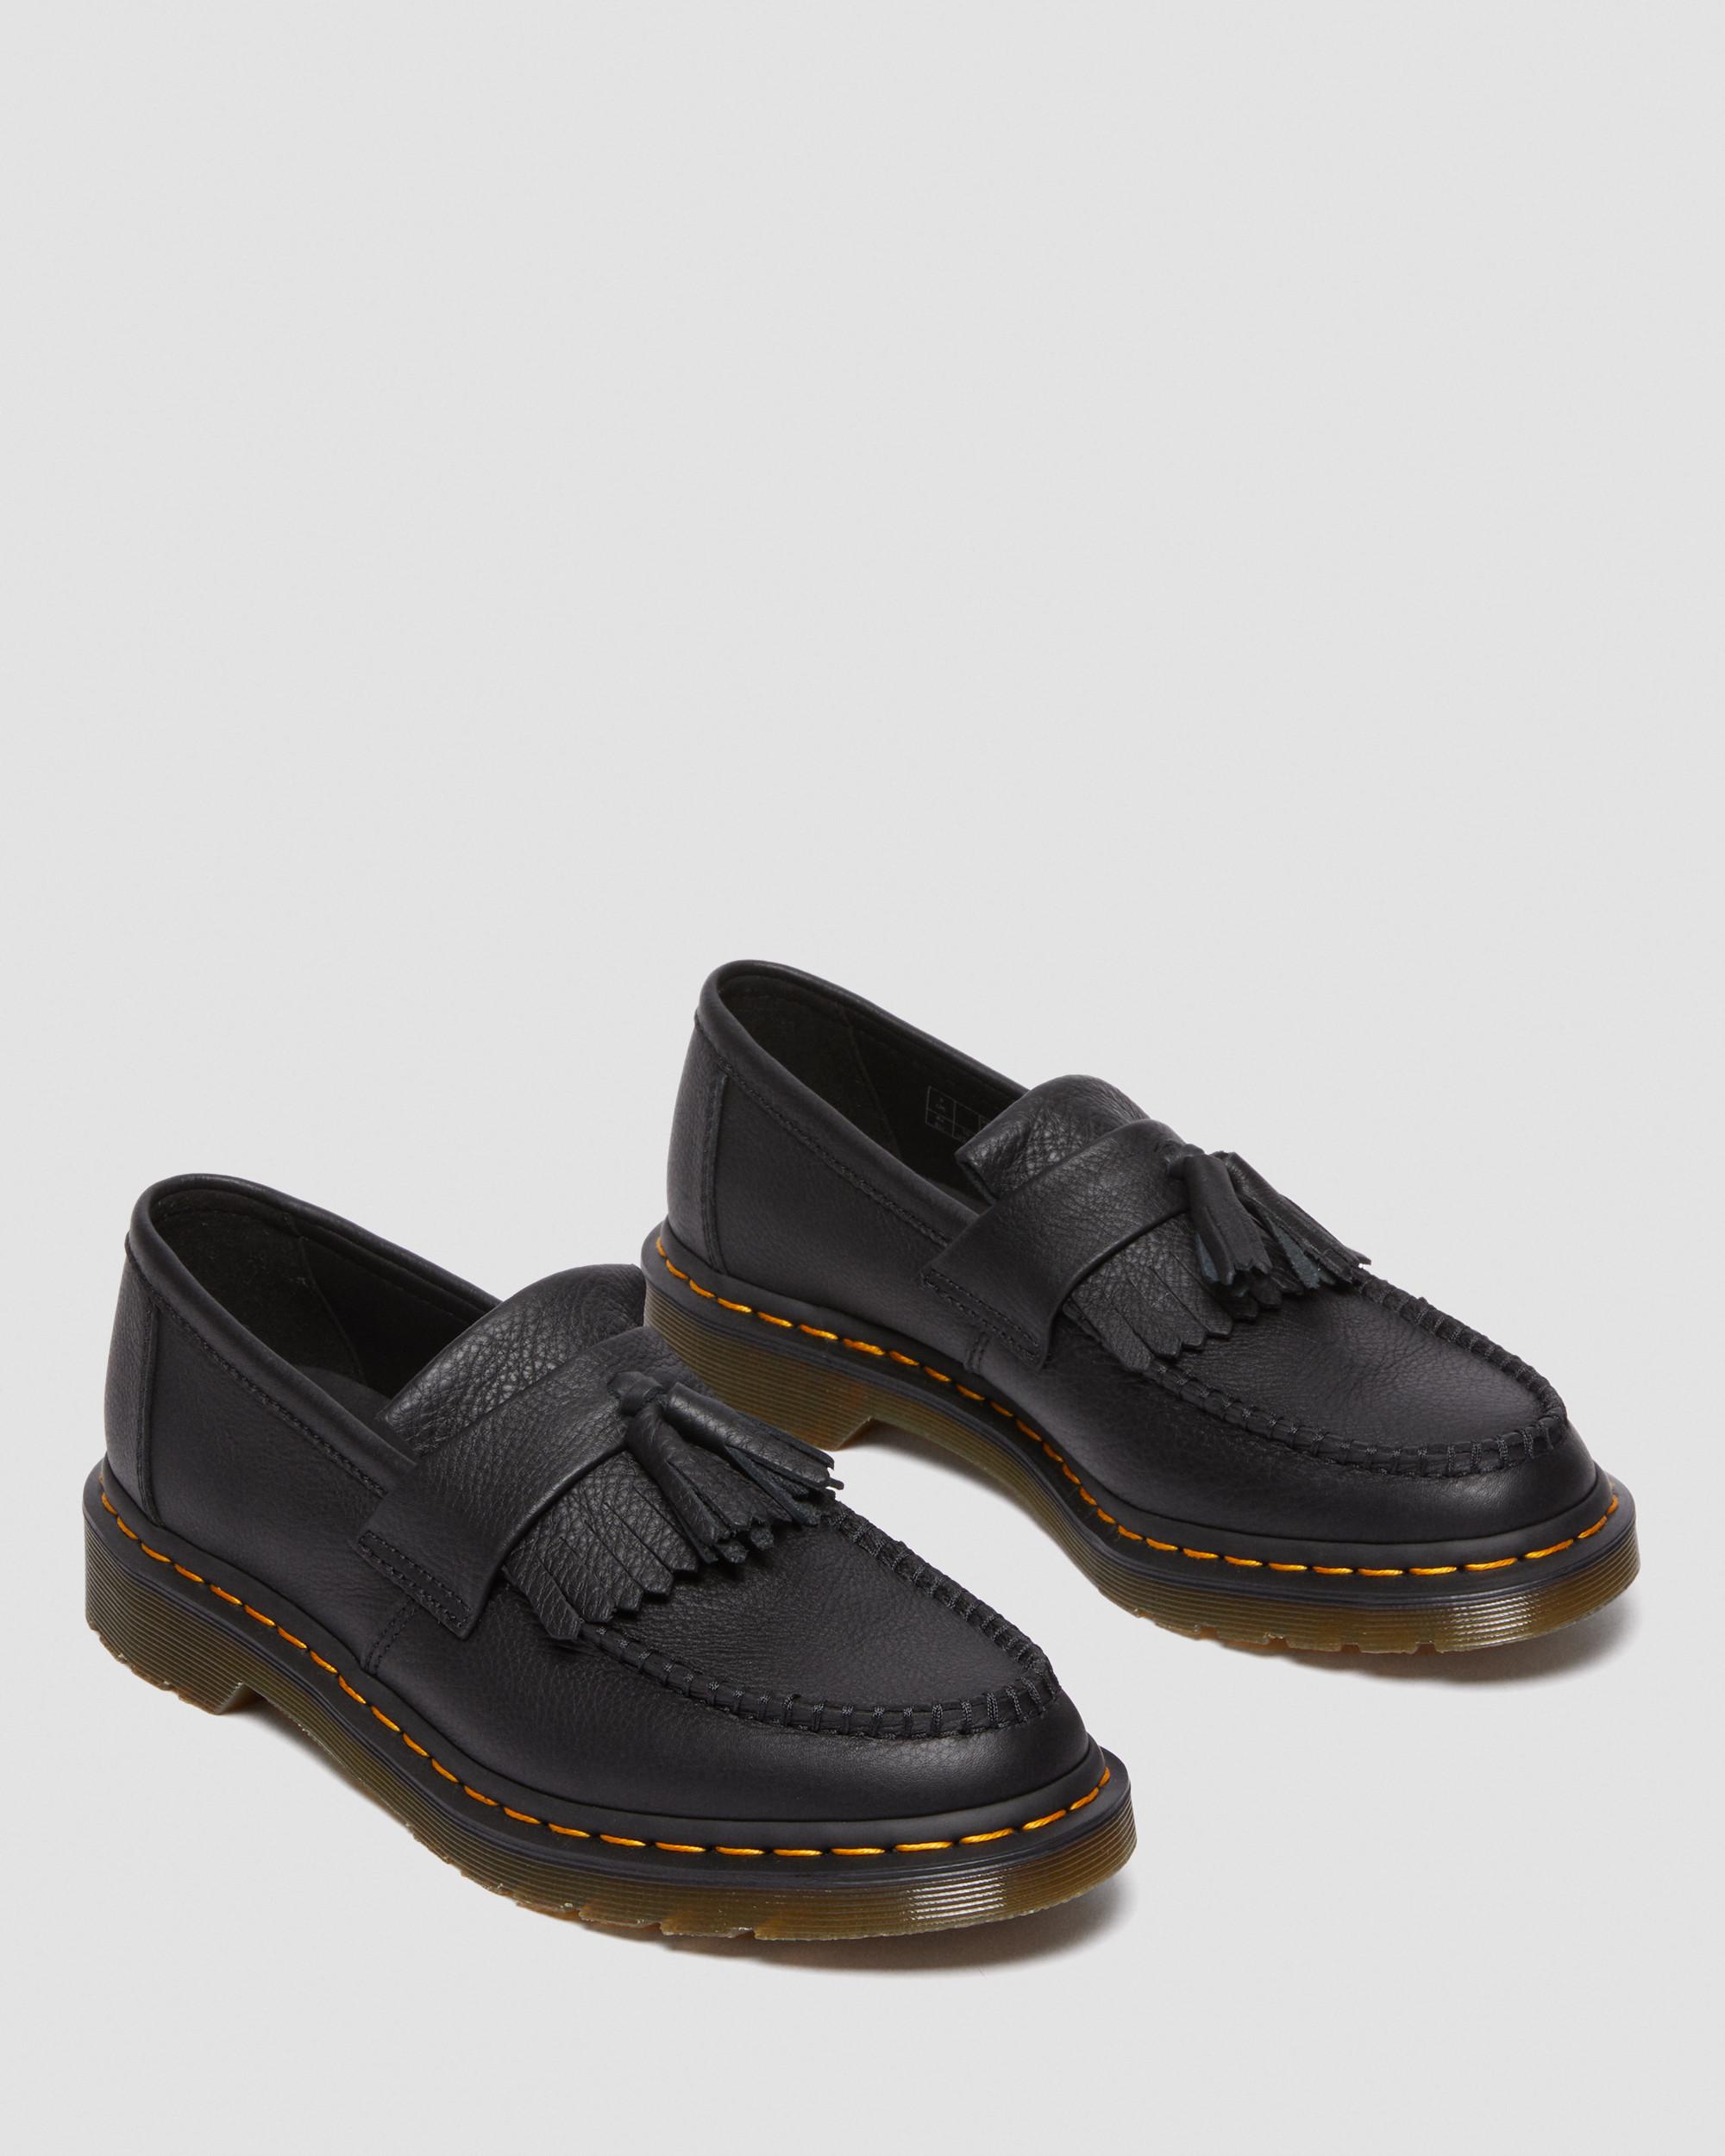 Adrian Virginia Leather Tassel Loafers in Black